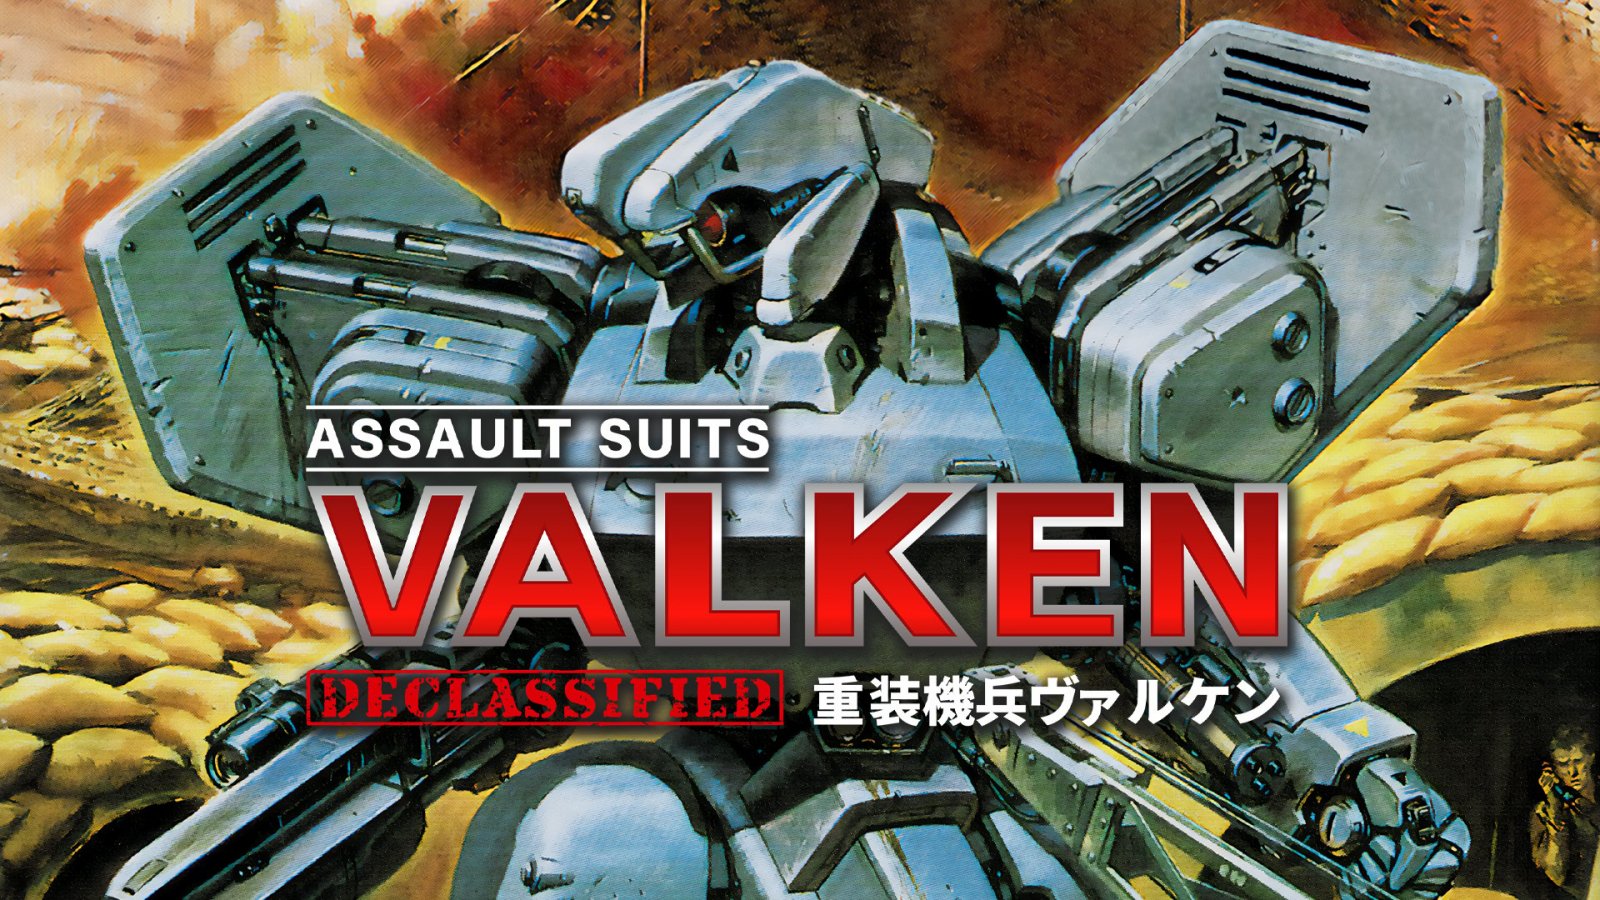 Assault Suits Valken Declassified annunciato con trailer per Nintendo Switch